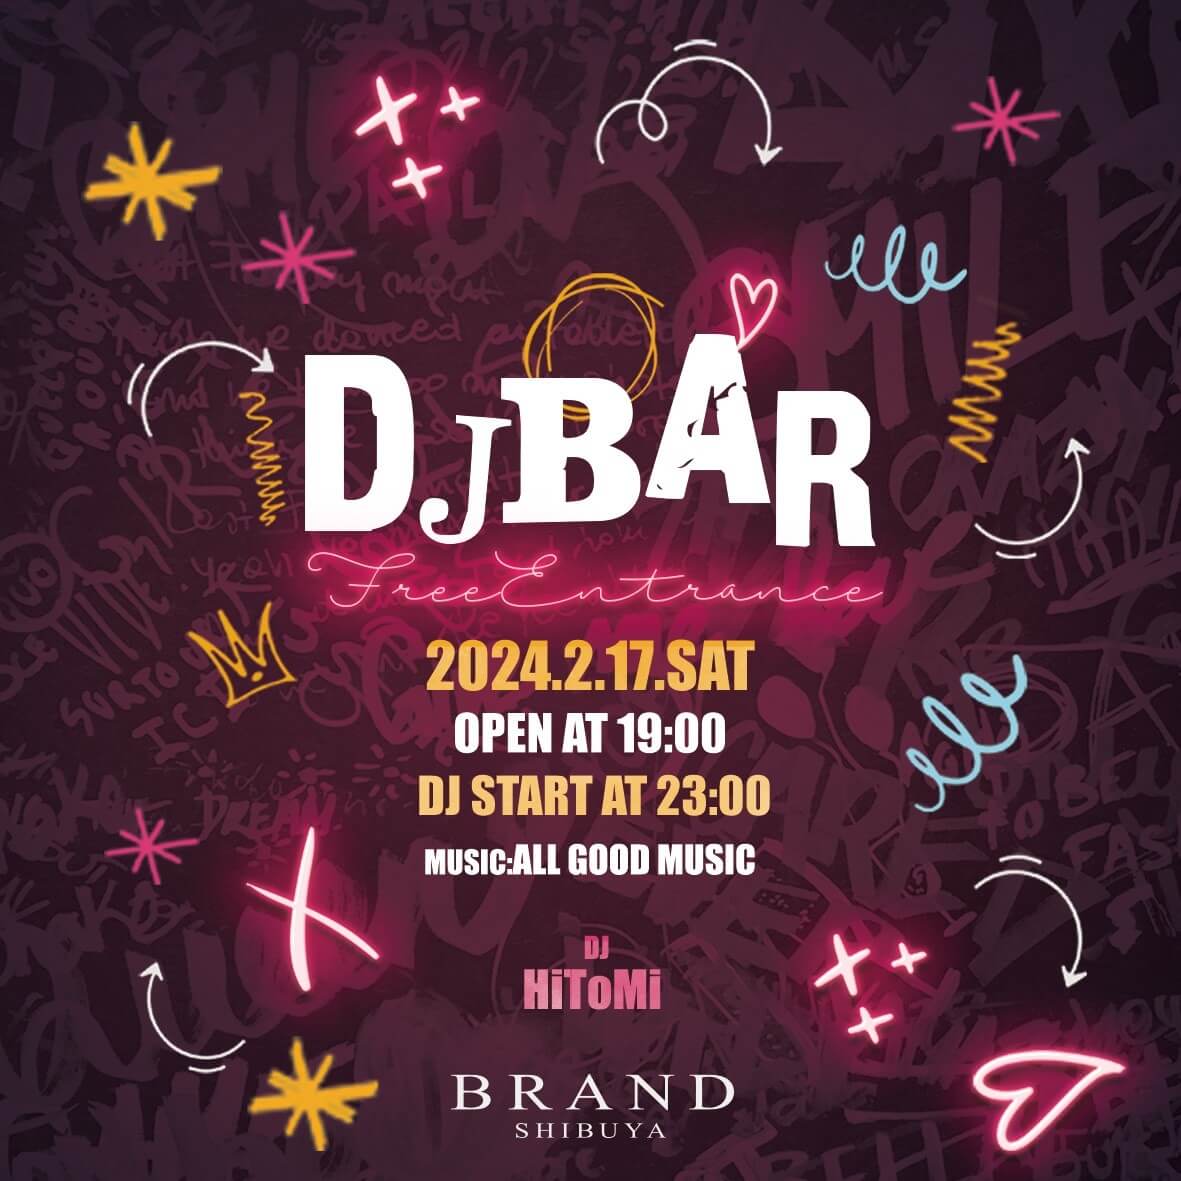 DJBAR 2024年02月17日（土曜日）に渋谷 クラブのBRAND SHIBUYAで開催されるALL MIXイベント